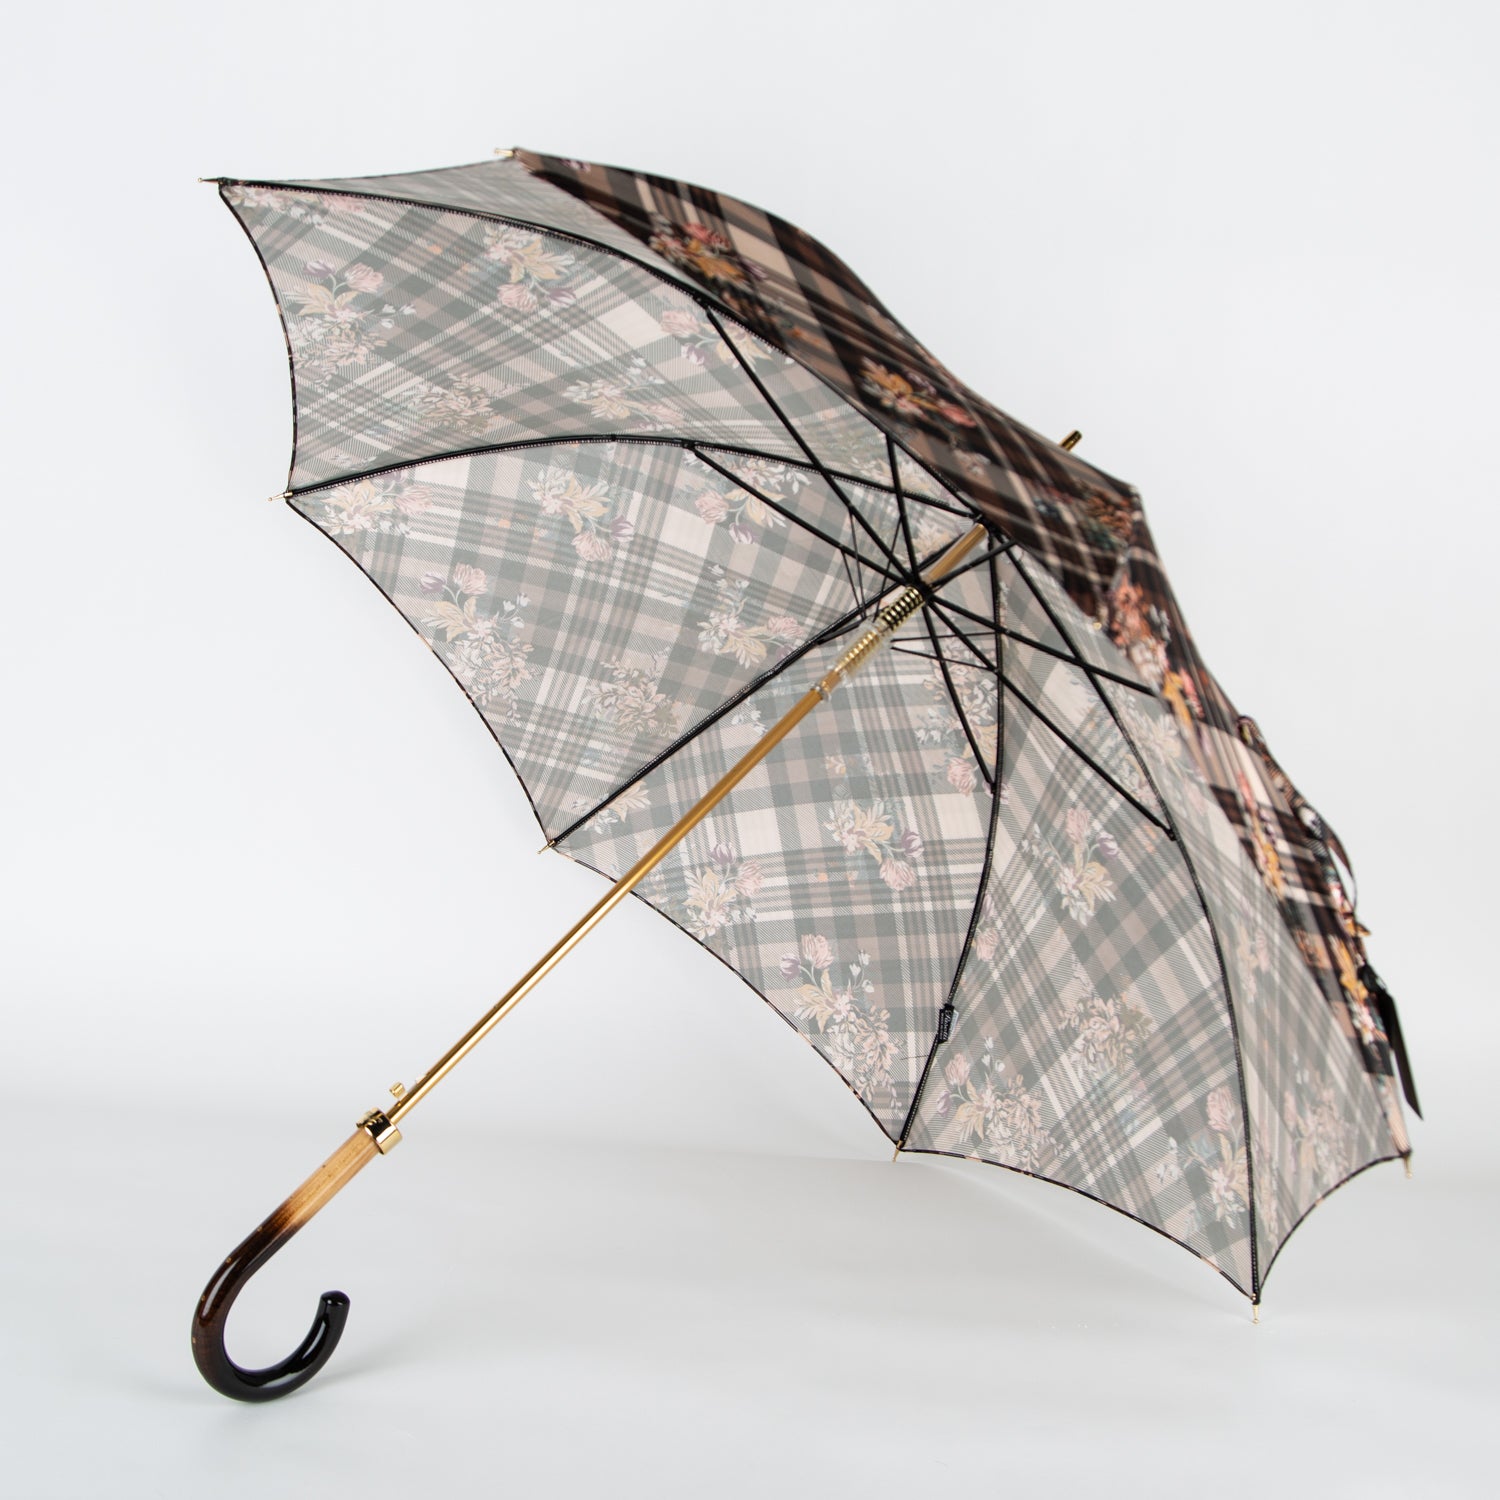 Tartan Umbrella With Floral Print - Secret Location